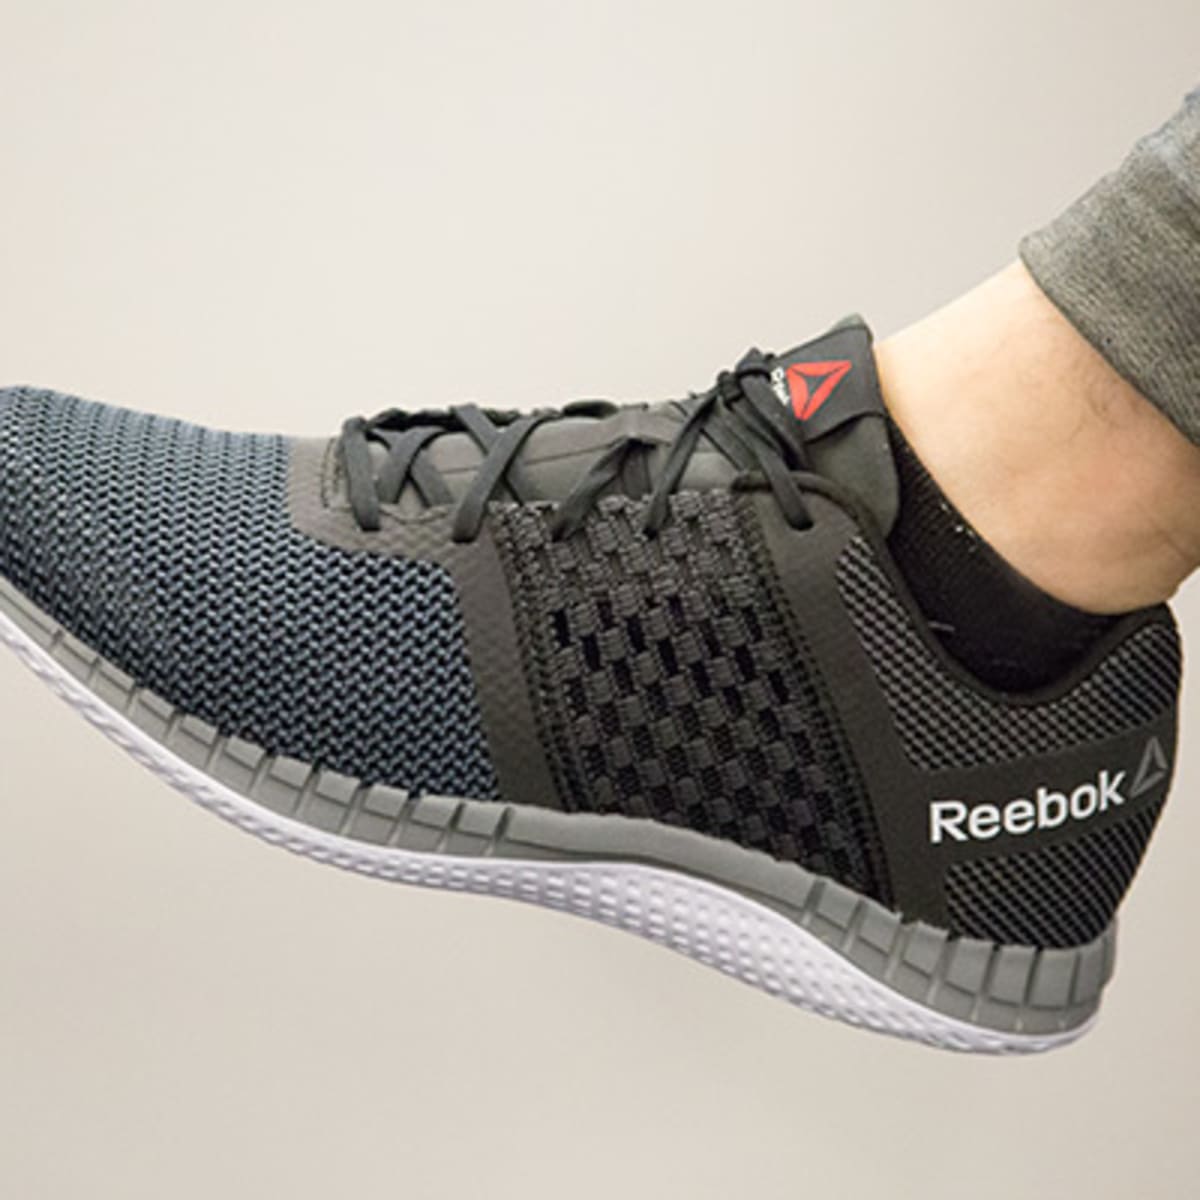 reebok shoes technology